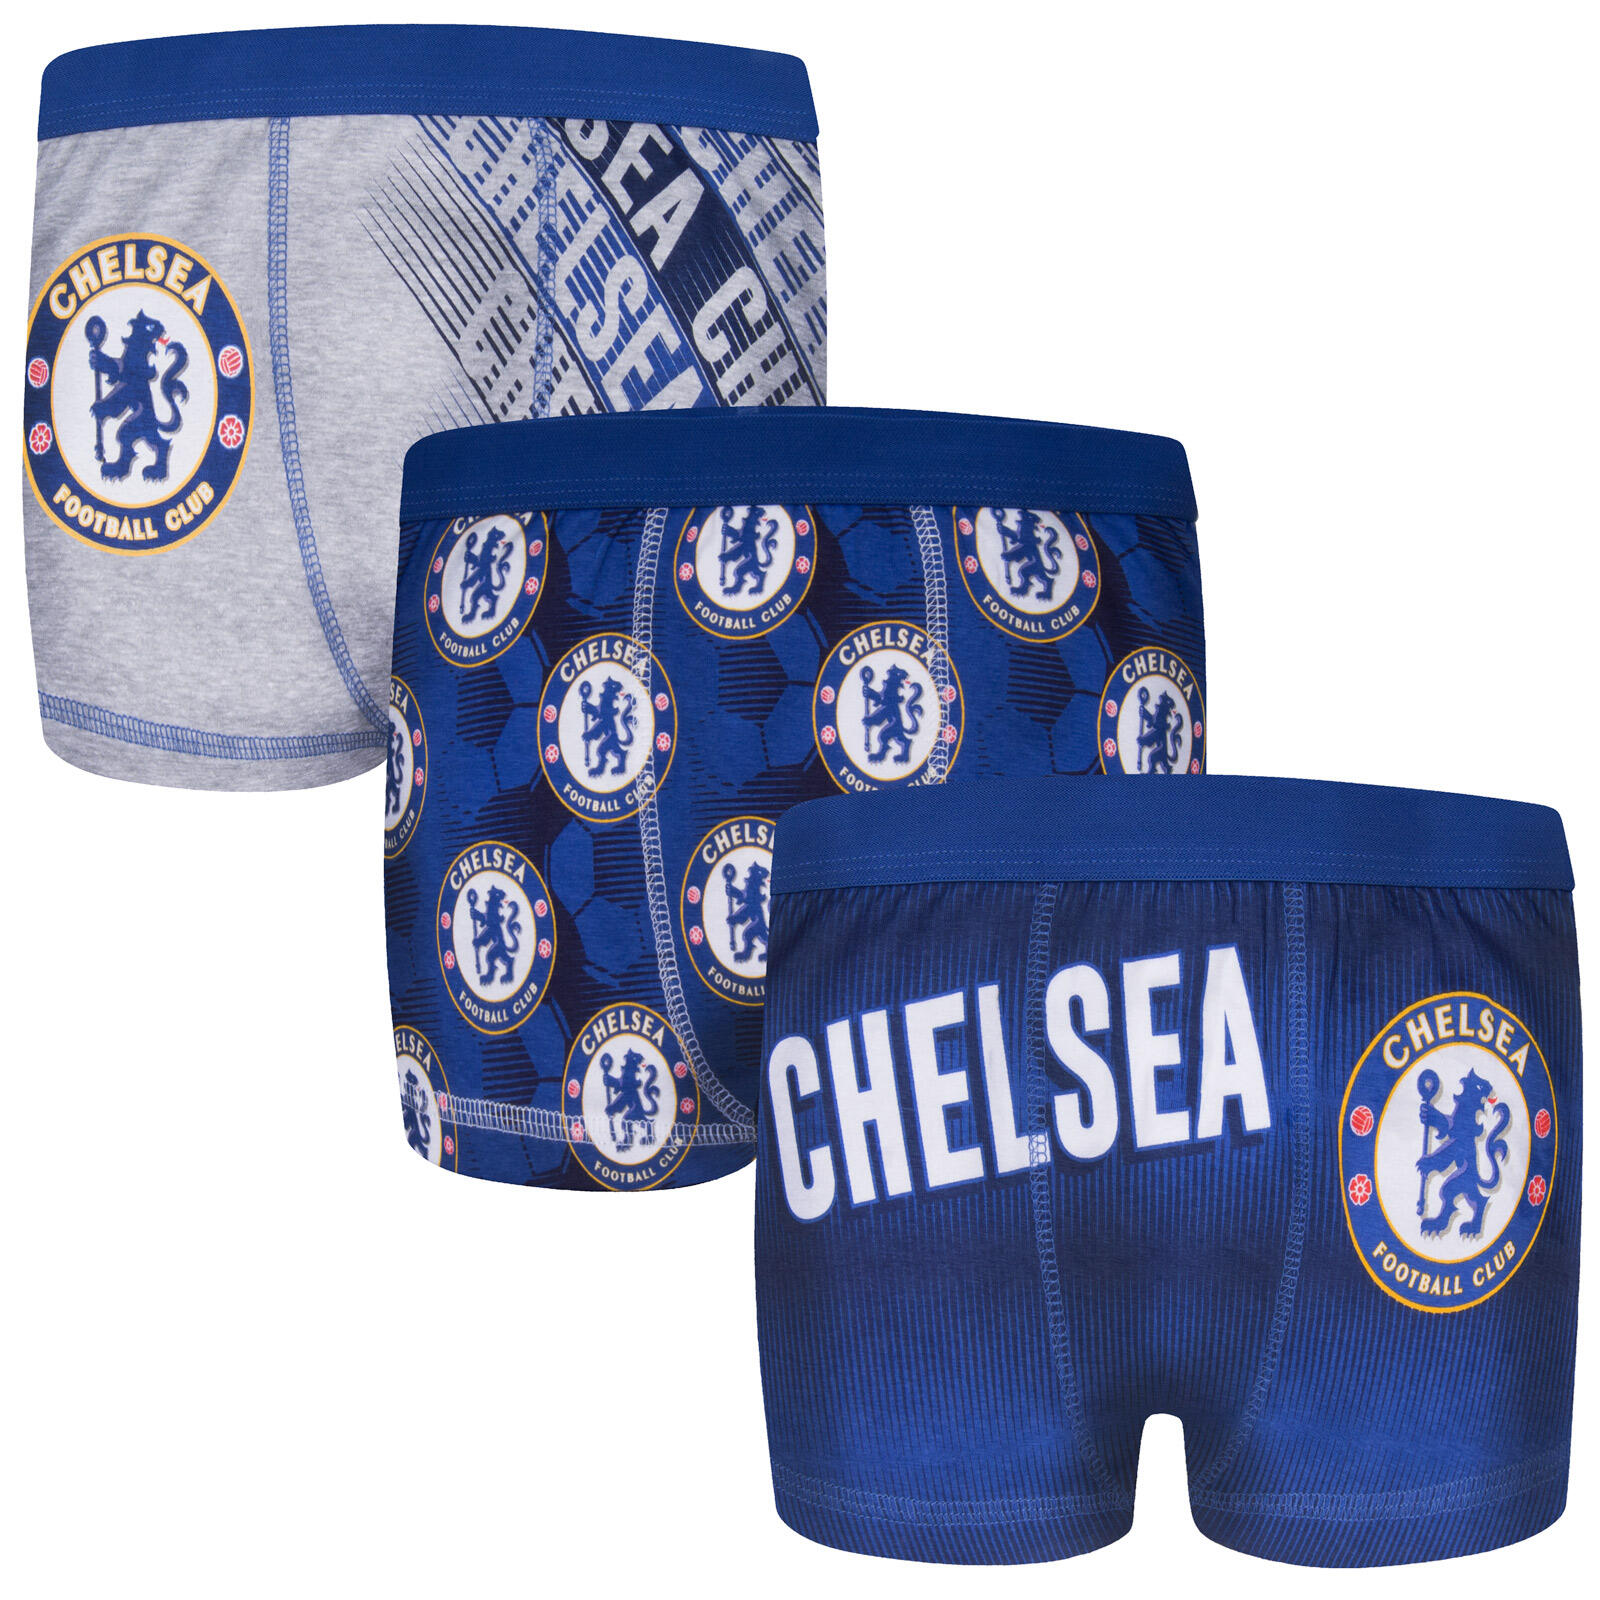 CHELSEA Chelsea FC Boys Boxer Shorts 3 Pack Crest Kids OFFICIAL Football Gift